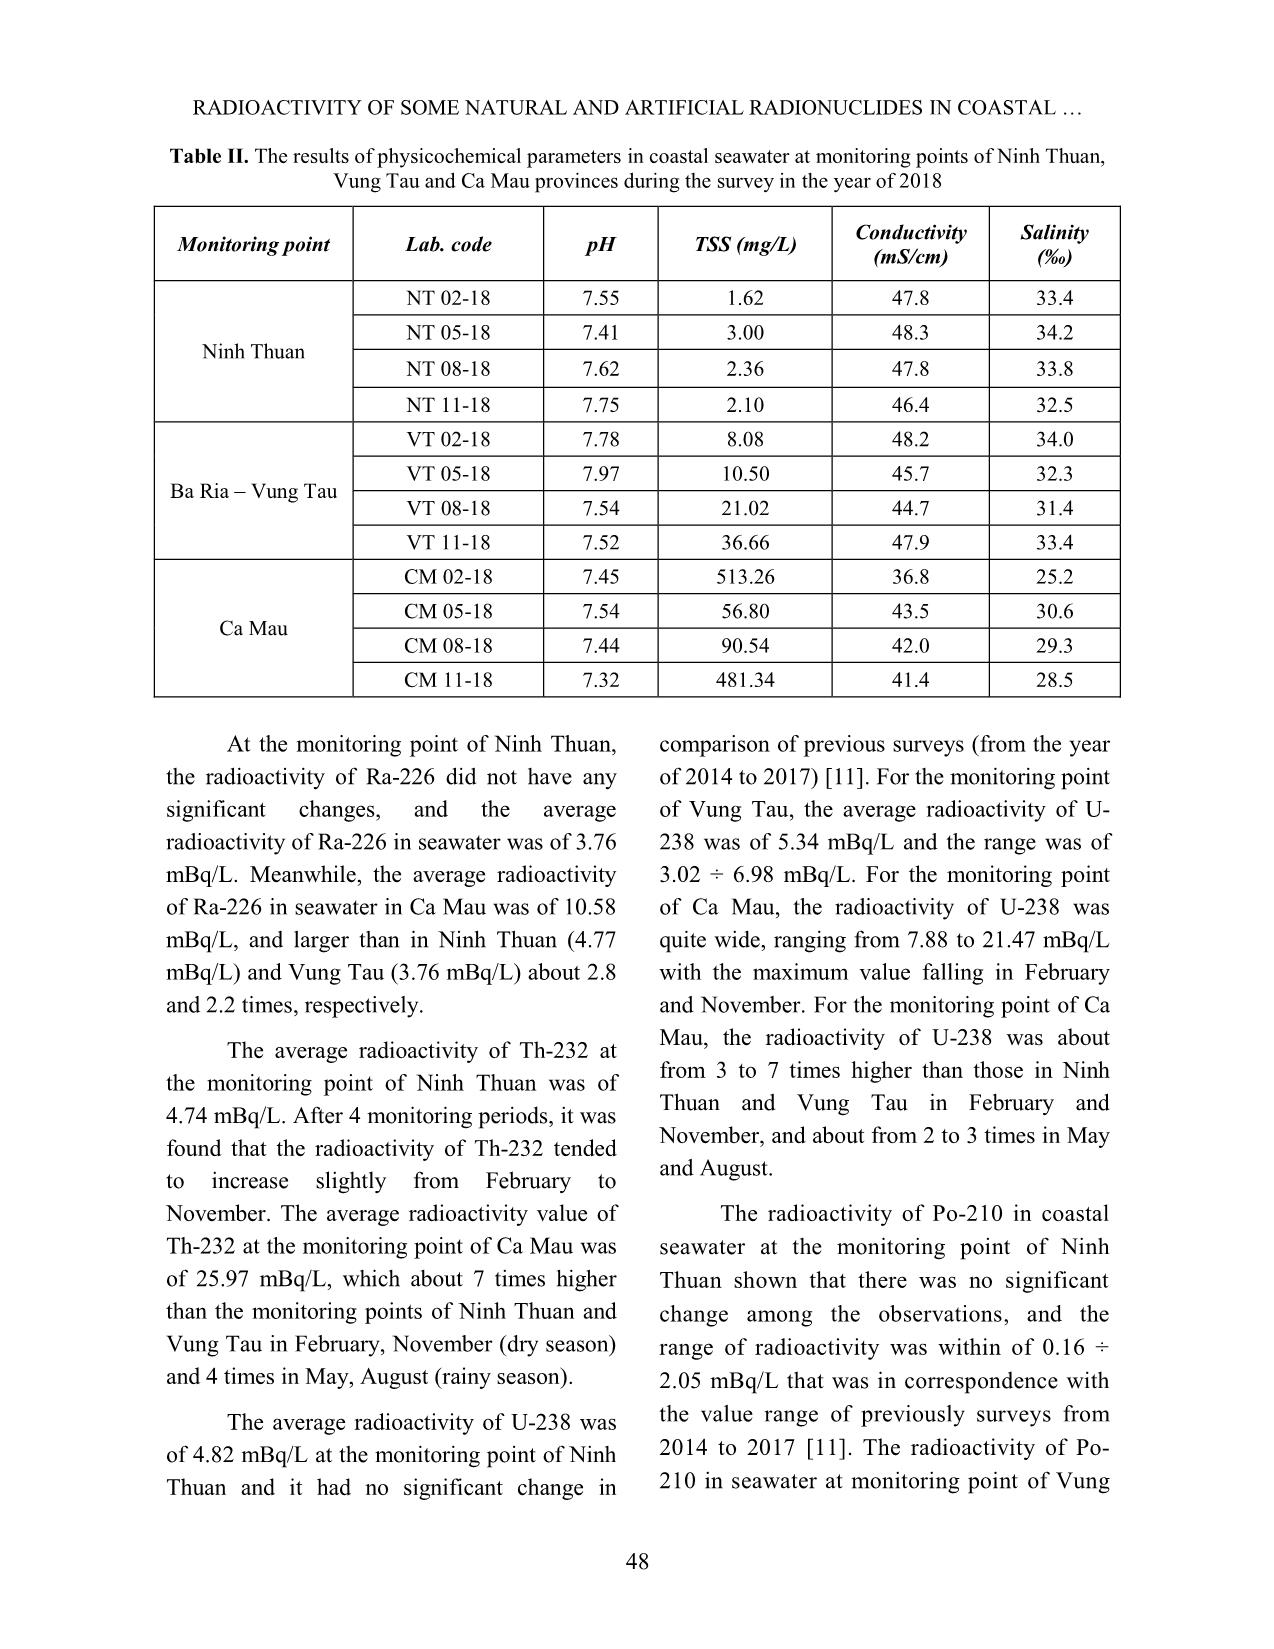 Radioactivity of some natural and artificial radionuclides in coastal seawater at Ninh Thuan, Ba Ria - Vung Tau and Ca Mau provinces in 2018 trang 5